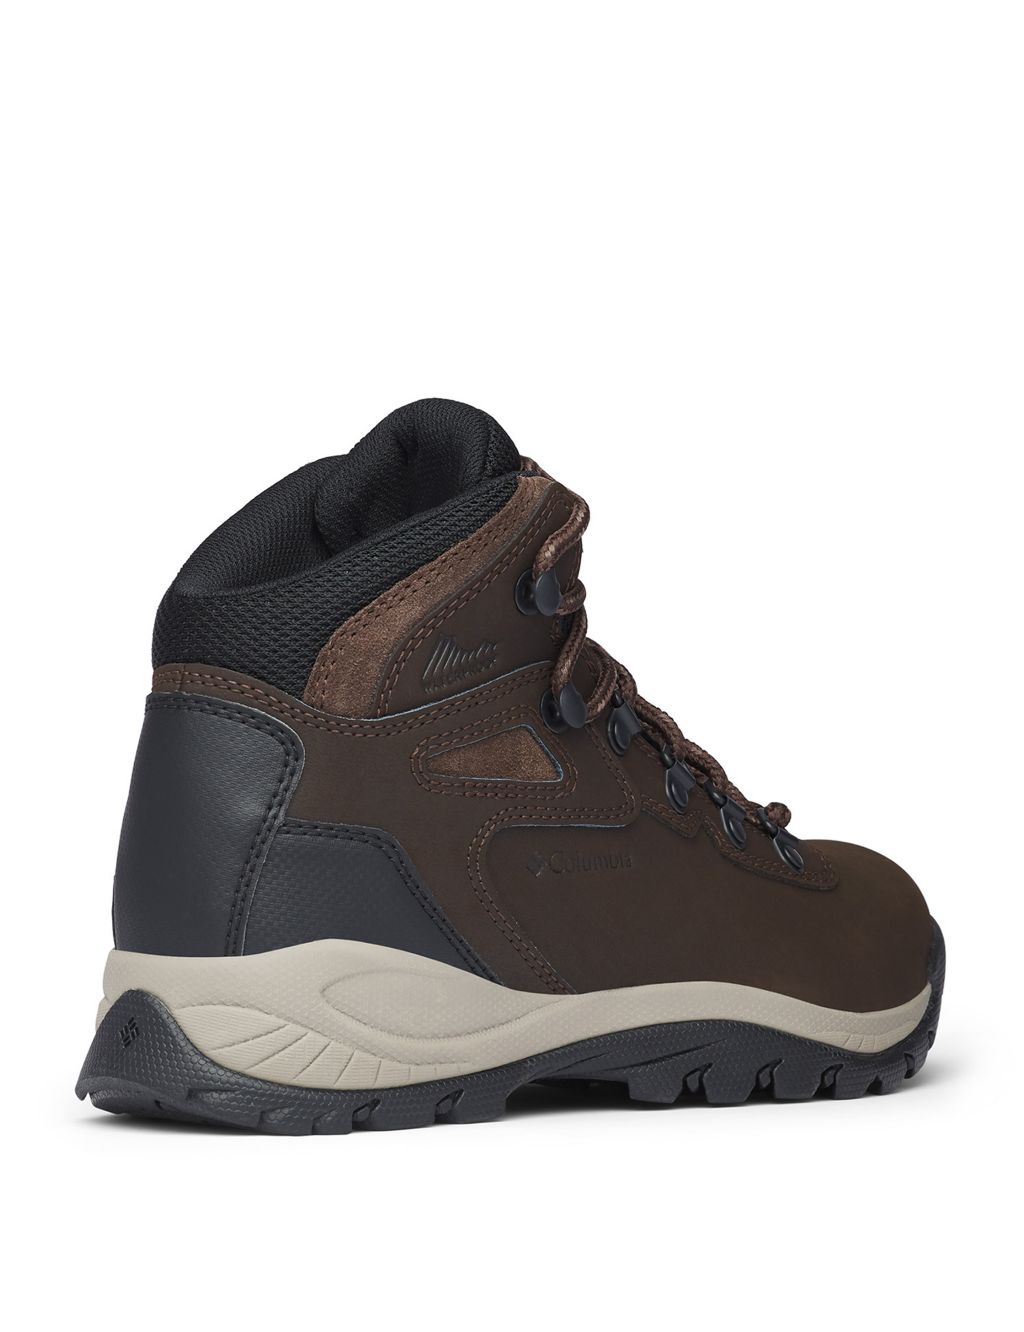 Newton Ridge Plus Leather Walking Boots image 3